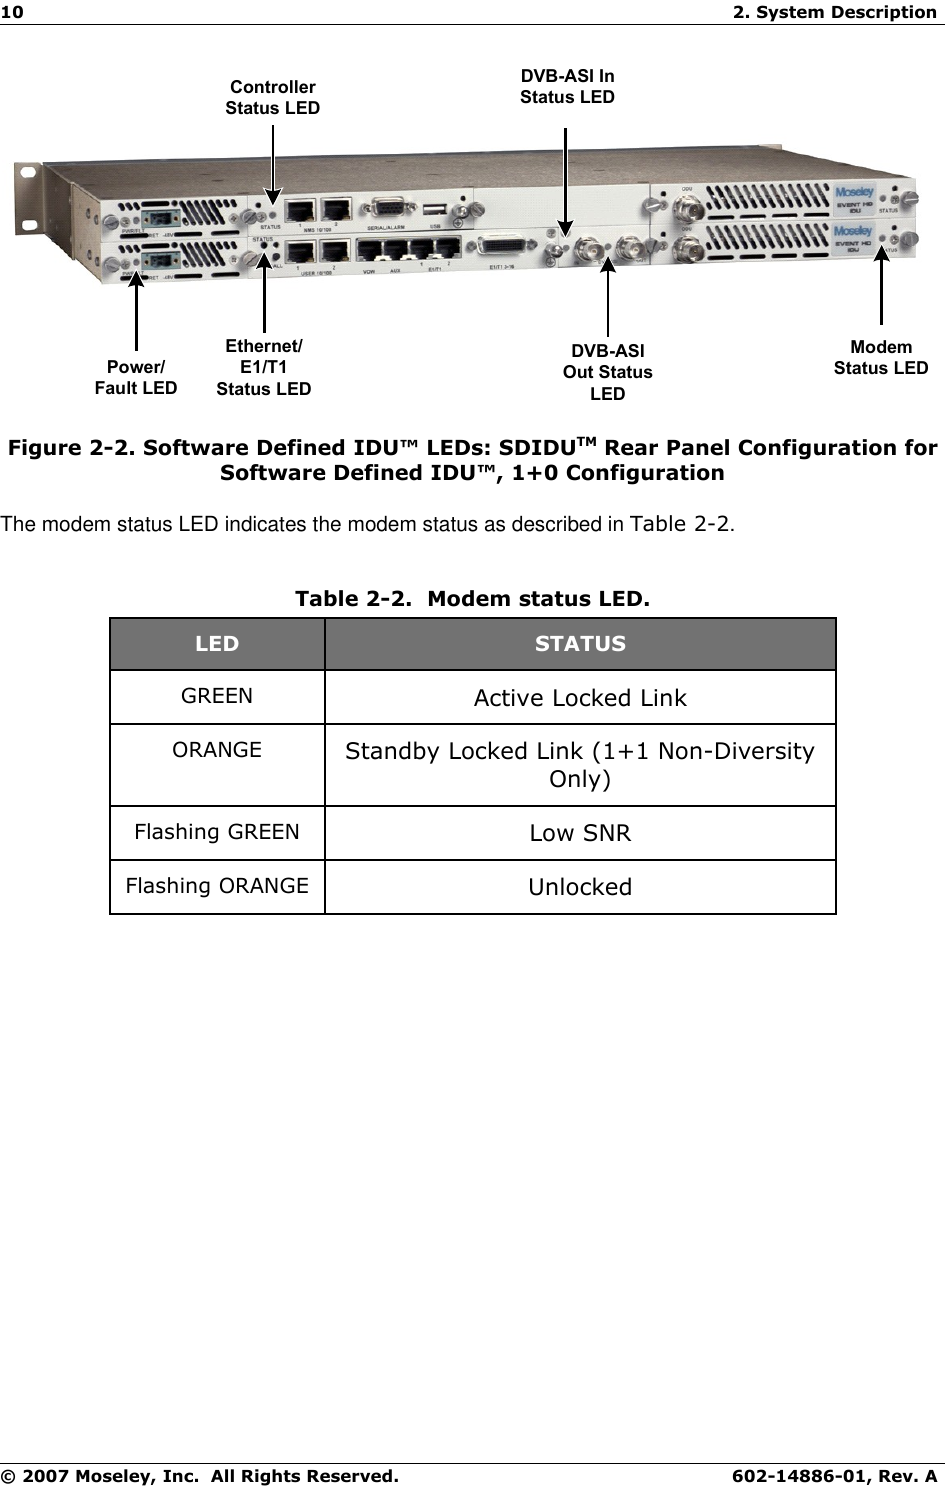 10 2. System DescriptionController Status LEDPower/Fault LEDEthernet/E1/T1 Status LEDDVB-ASI Out Status LEDDVB-ASI In Status LEDModem Status LEDFigure 2-2. Software Defined IDU™ LEDs: SDIDUTM Rear Panel Configuration for Software Defined IDU™, 1+0 ConfigurationThe modem status LED indicates the modem status as described in Table 2-2.Table 2-2.  Modem status LED.LED STATUSGREEN Active Locked LinkORANGE Standby Locked Link (1+1 Non-Diversity Only)Flashing GREEN Low SNRFlashing ORANGE Unlocked© 2007 Moseley, Inc.  All Rights Reserved. 602-14886-01, Rev. A